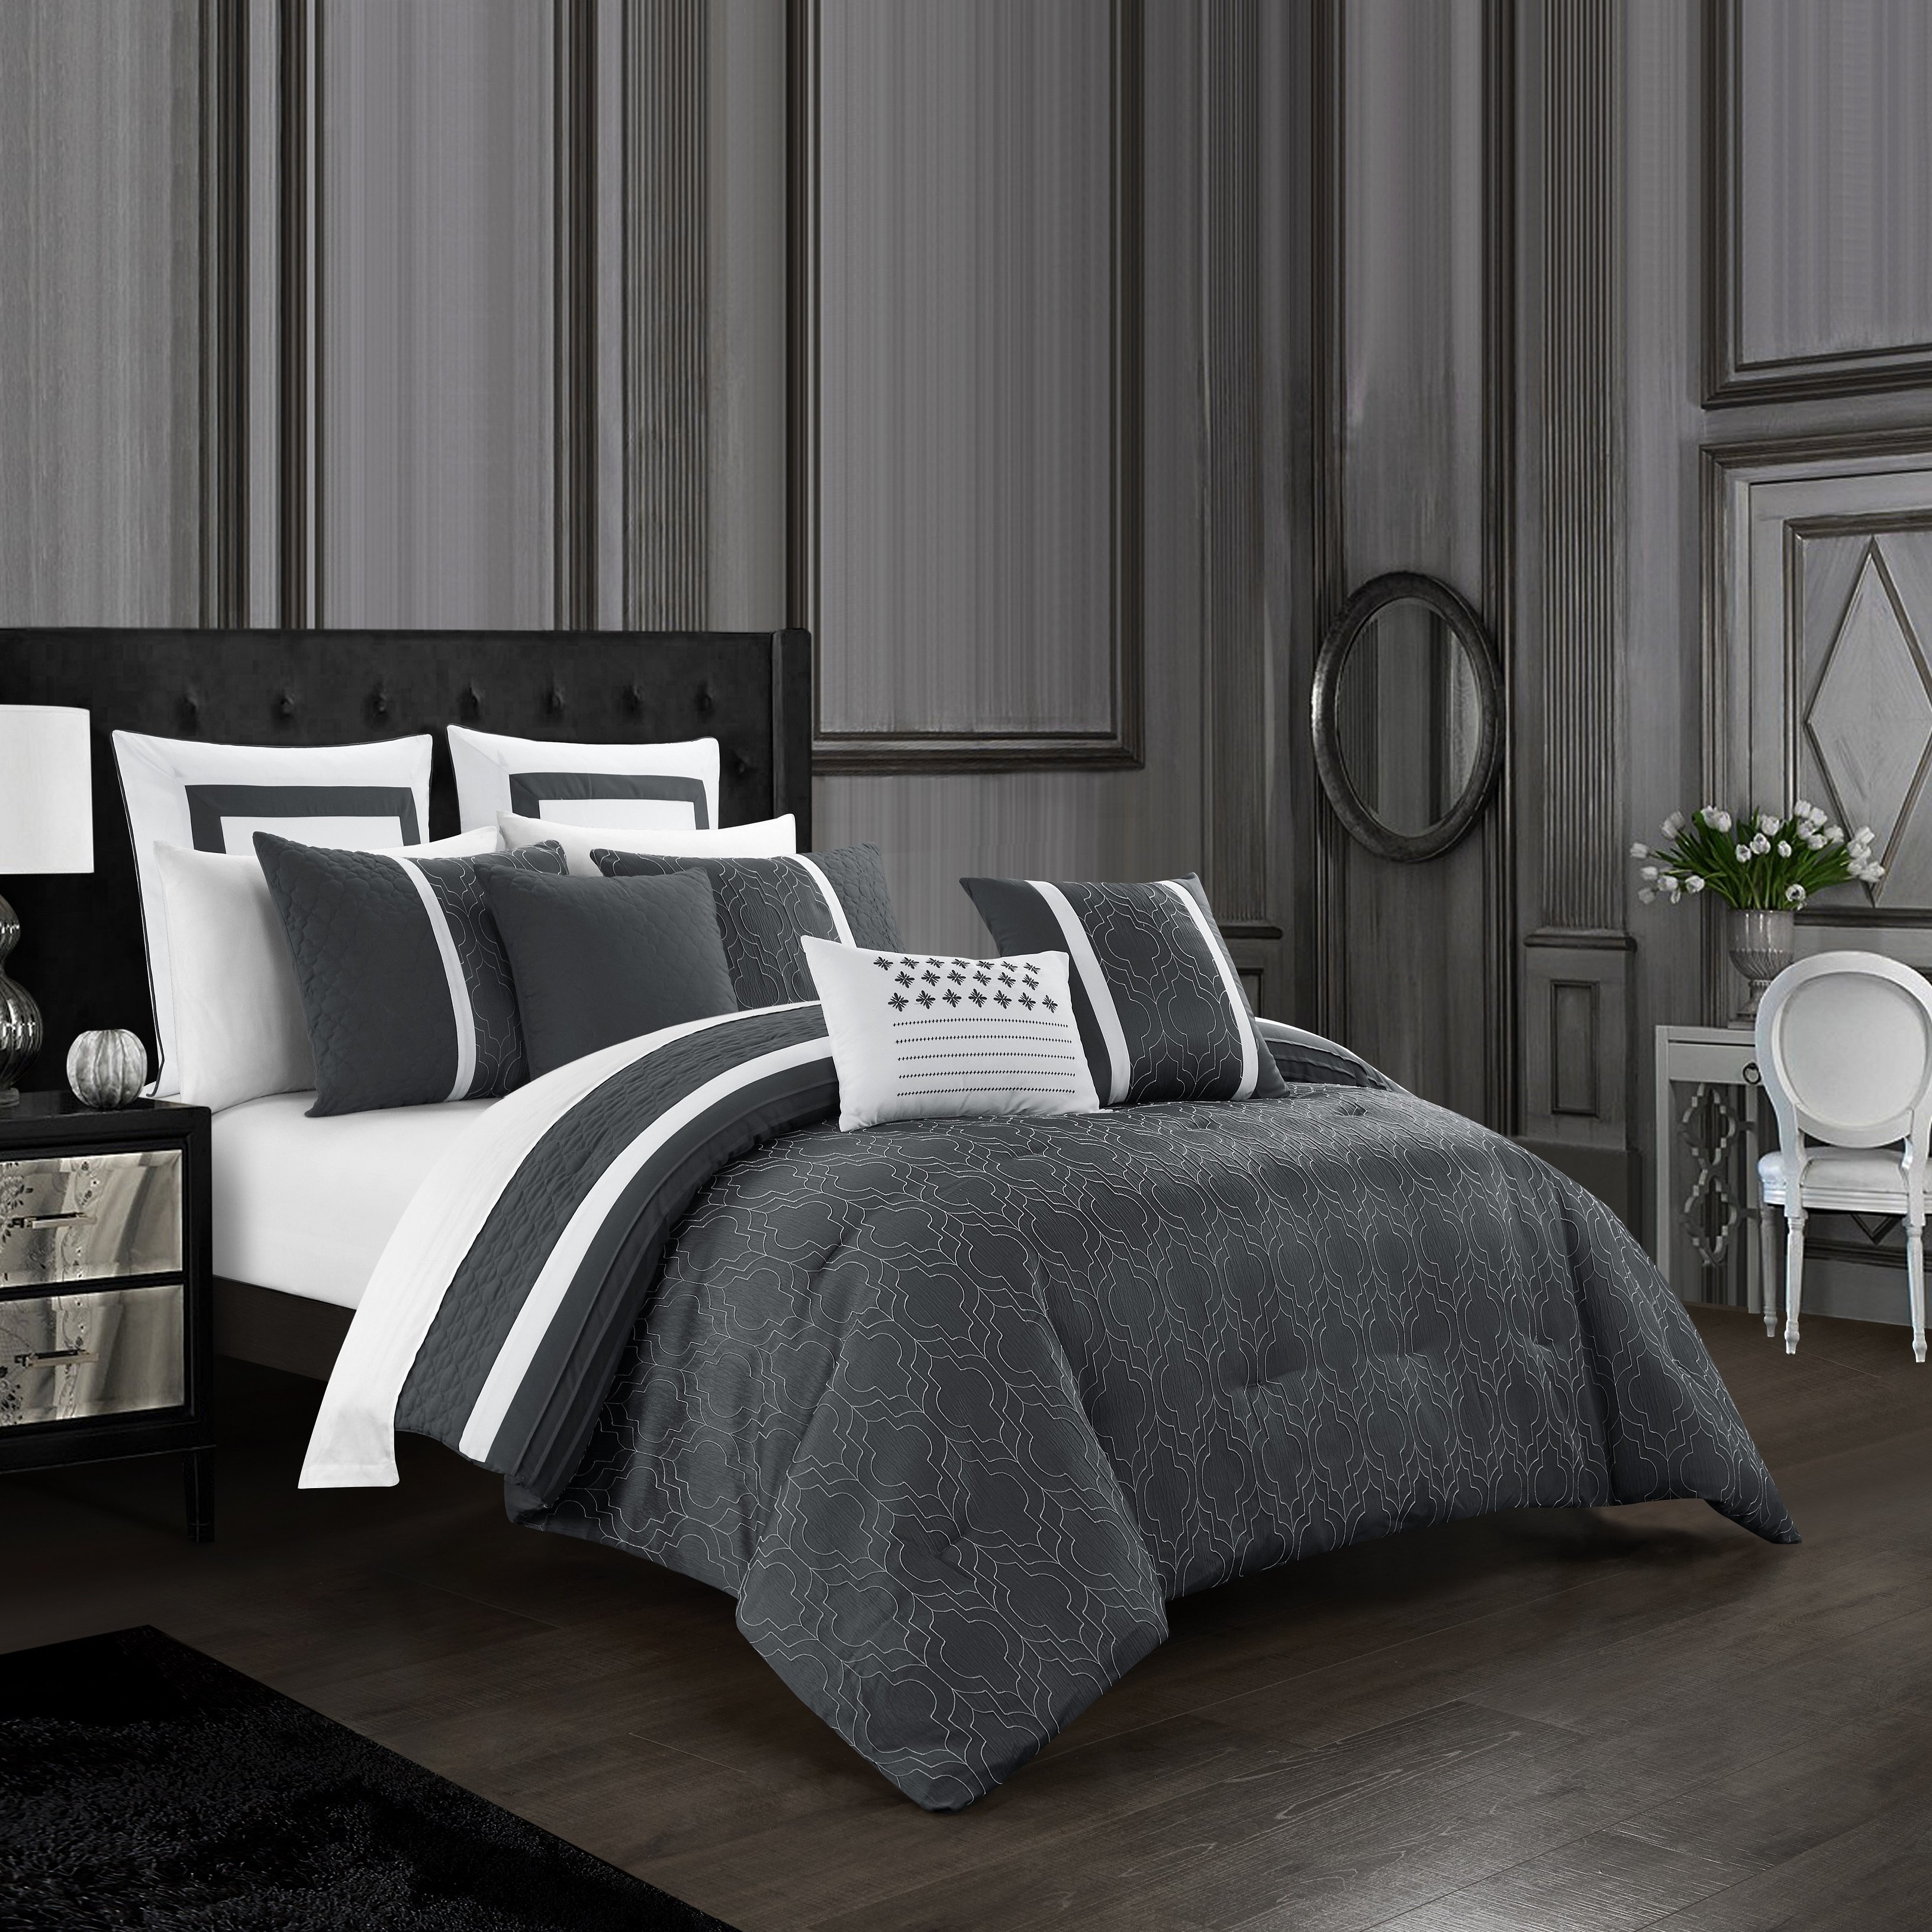 Arlow 8 Piece Comforter Set Jacquard Geometric Quilted Pattern Design Bedding - Grey, Queen